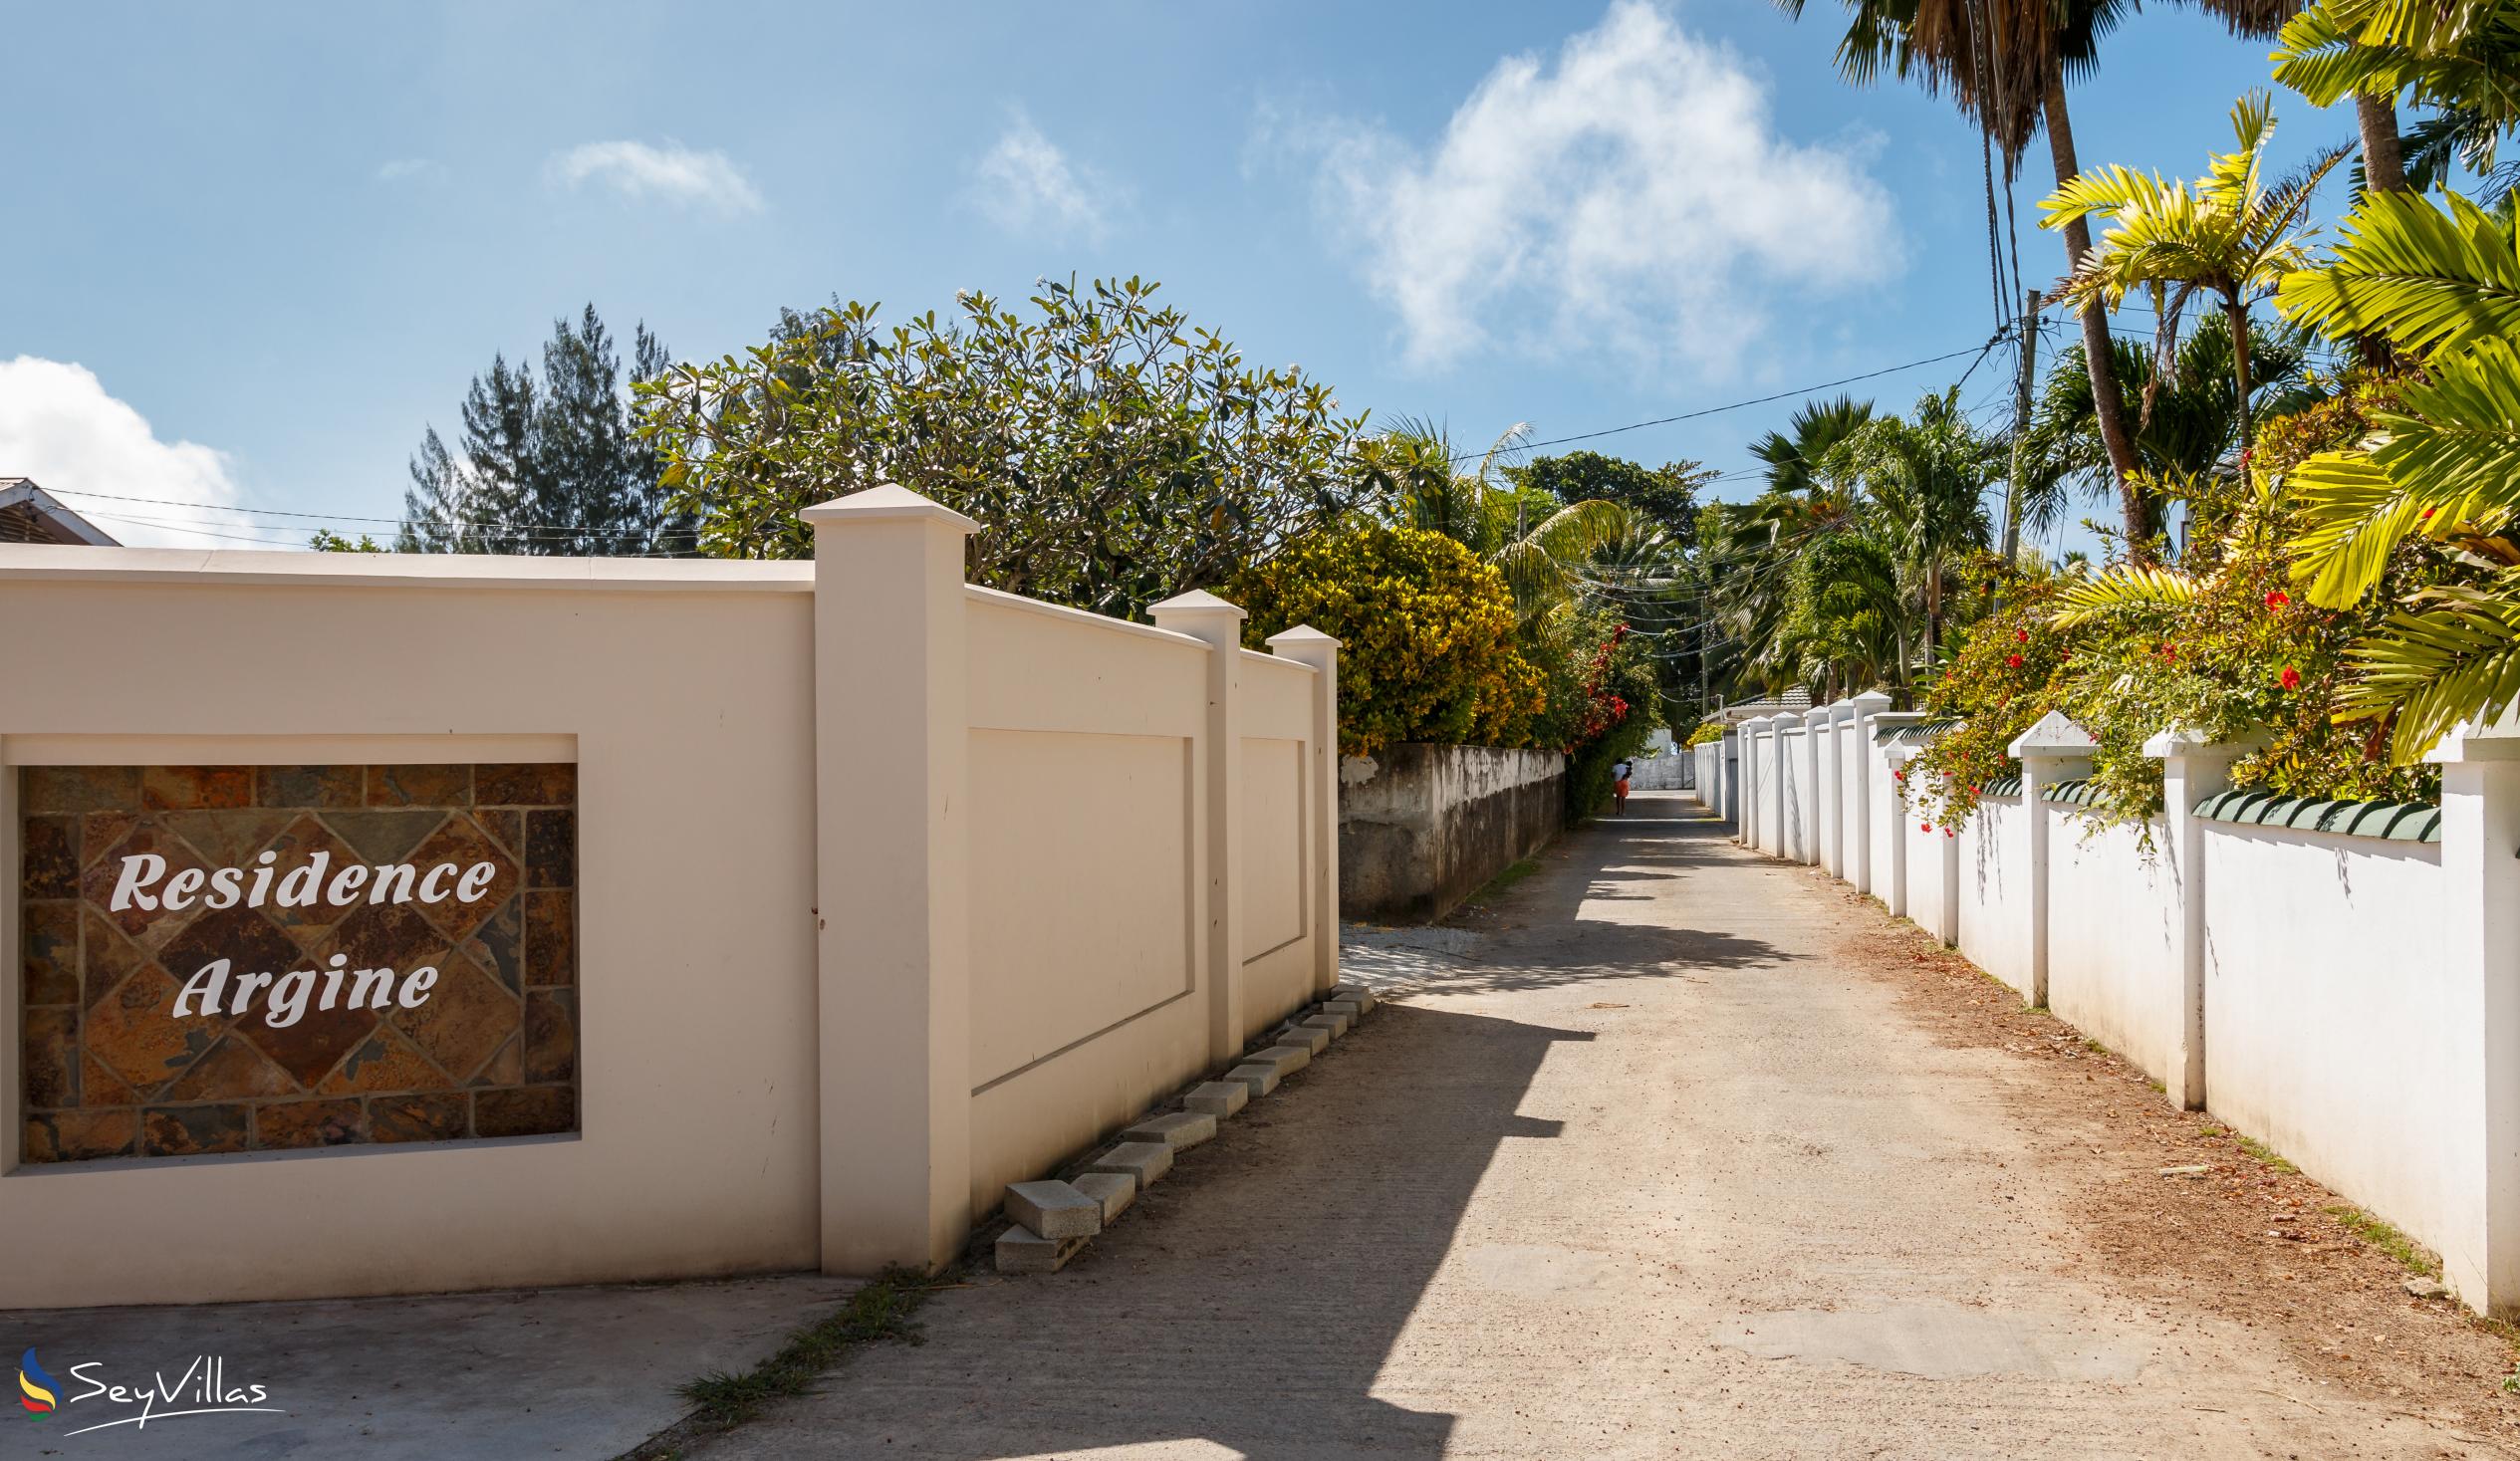 Foto 24: Residence Argine - Location - Mahé (Seychelles)